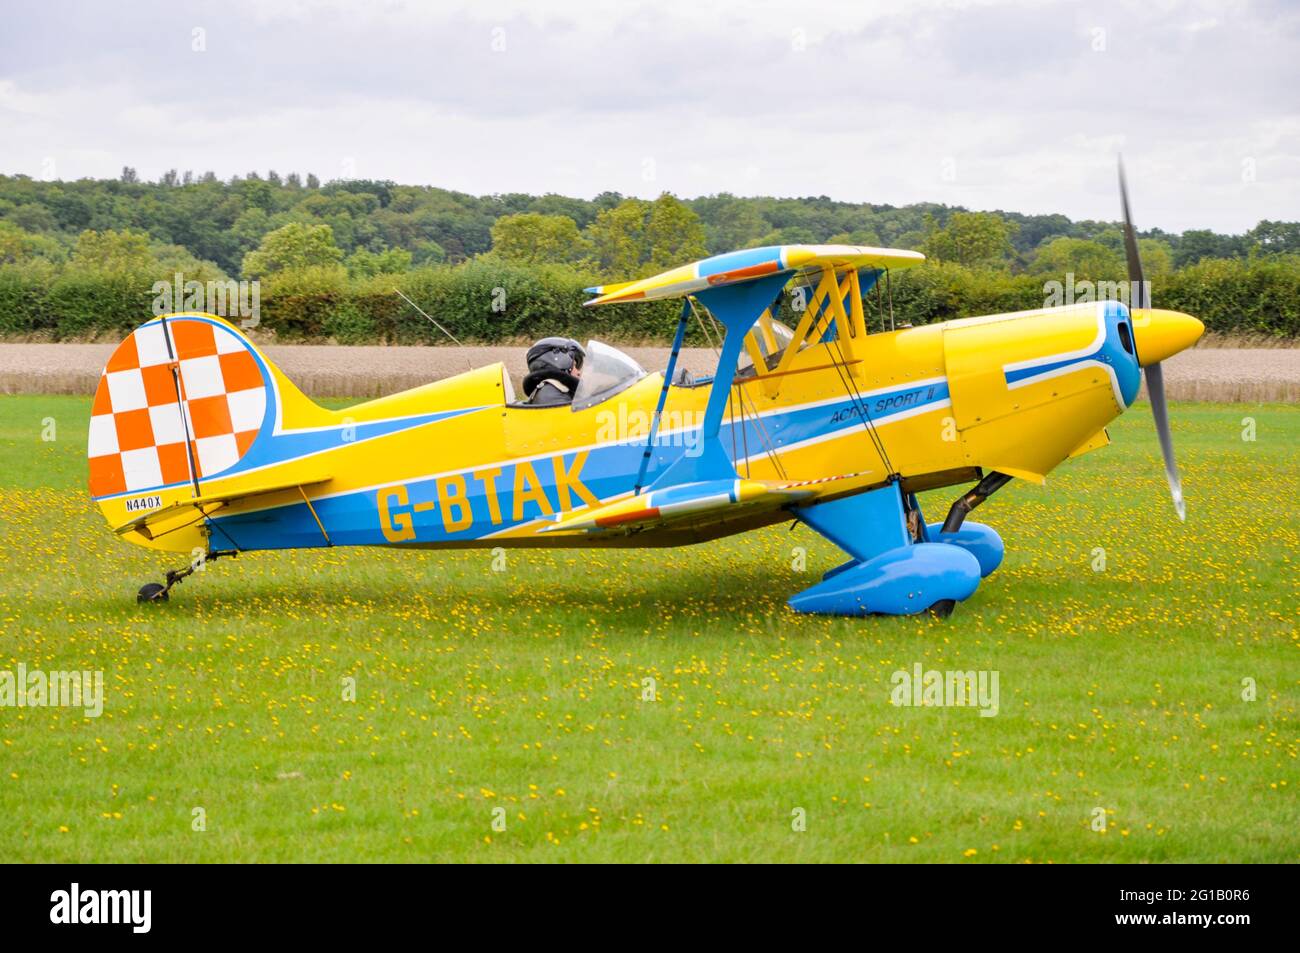 https://c8.alamy.com/comp/2G1B0R6/1983-savage-acro-sport-ii-aerobatic-sportsplane-g-btak-on-a-grass-airfield-with-long-grass-savage-ap-acrosport-2-two-seater-kit-built-plane-2G1B0R6.jpg